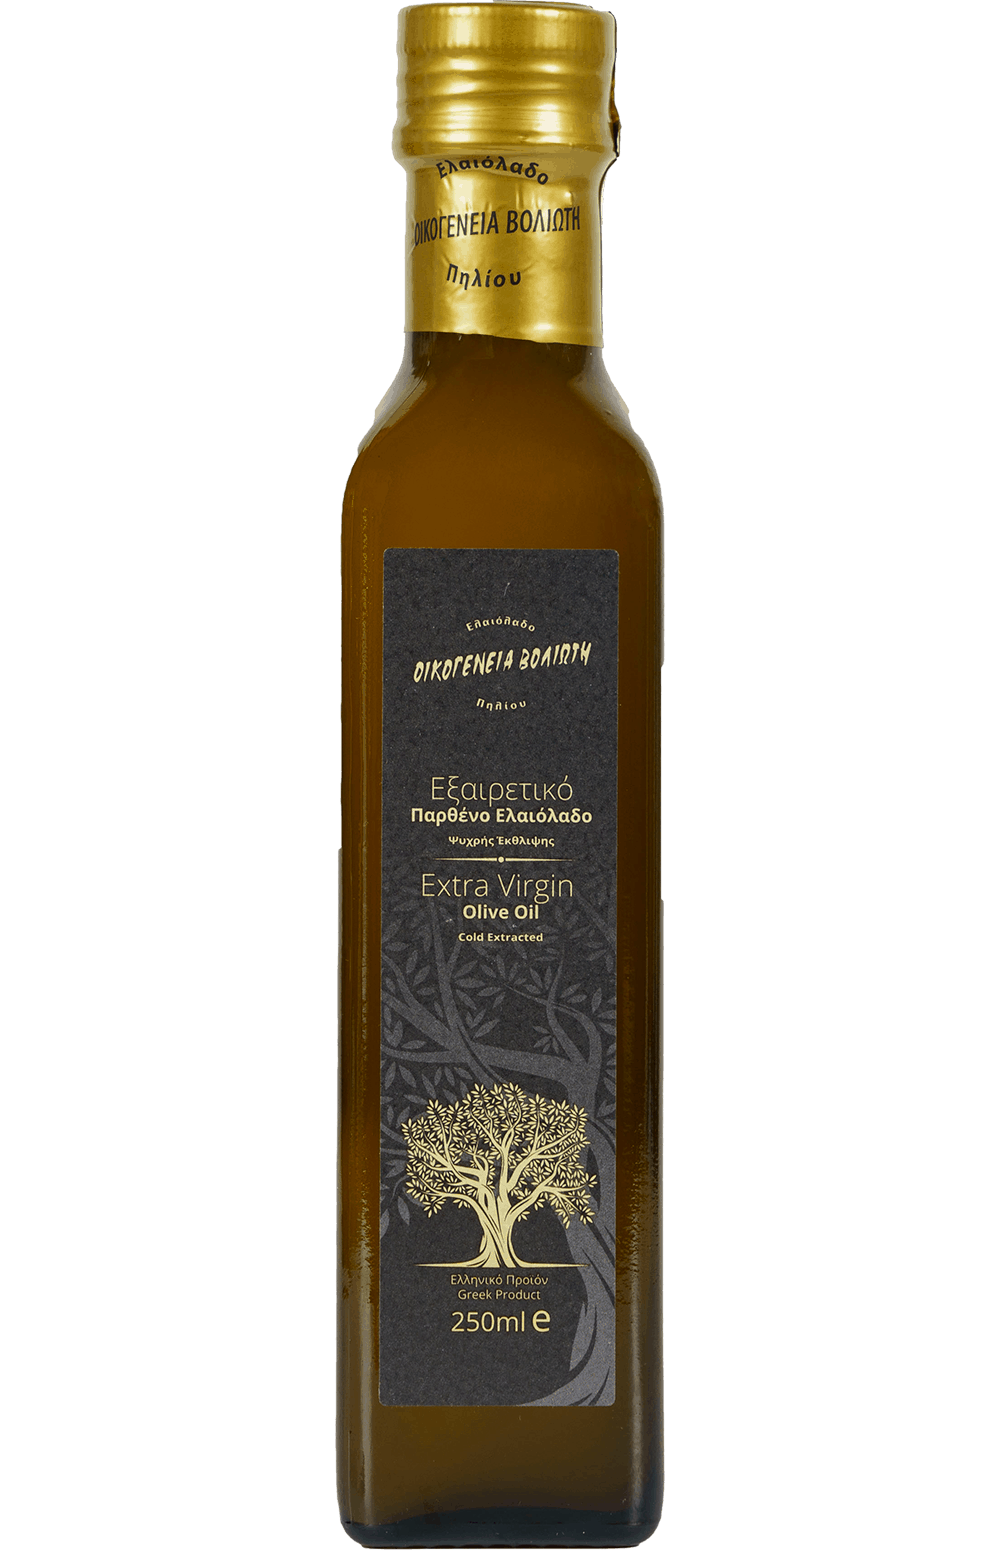 Olive oil of Pilion